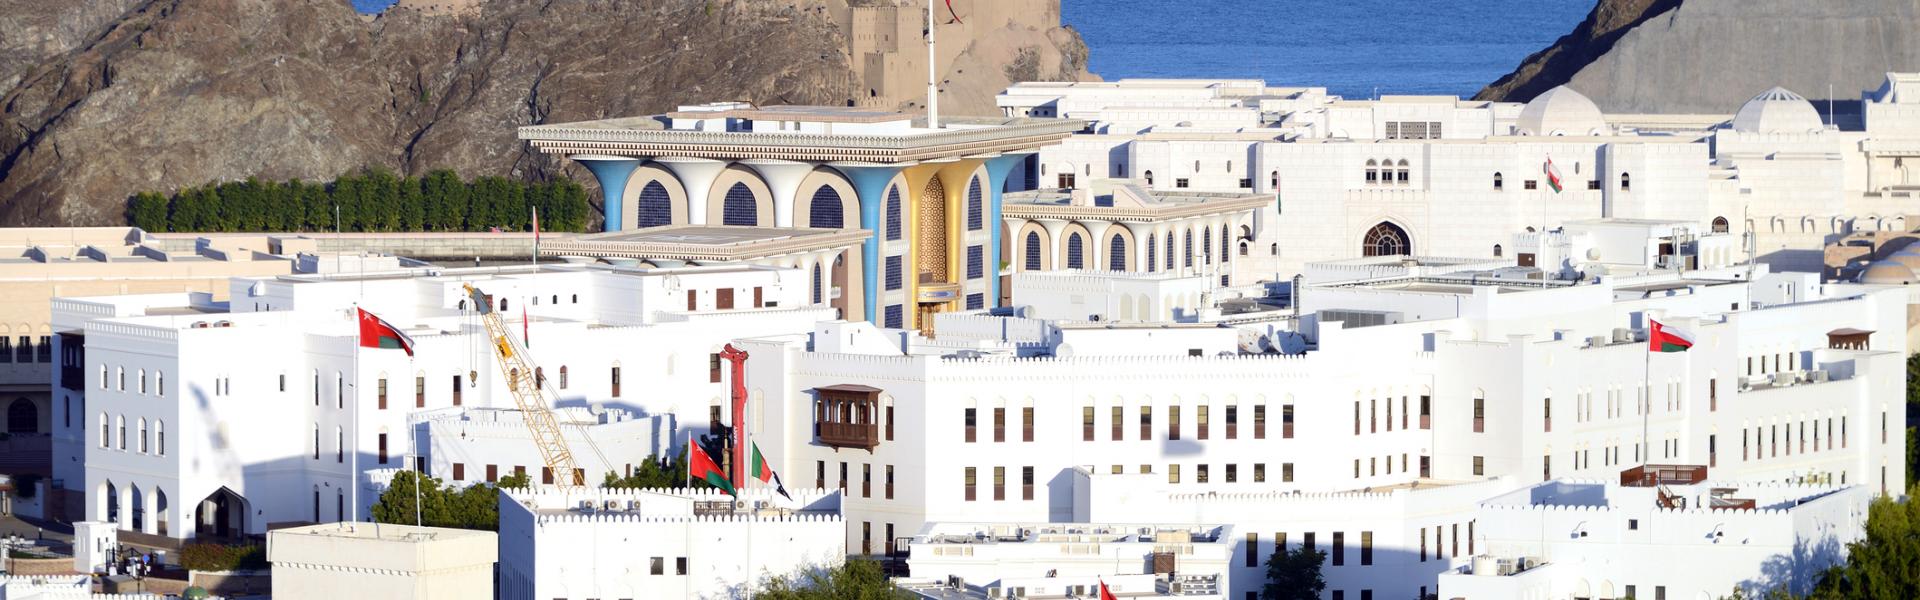 Noclegi w Omanie - HomeToGo